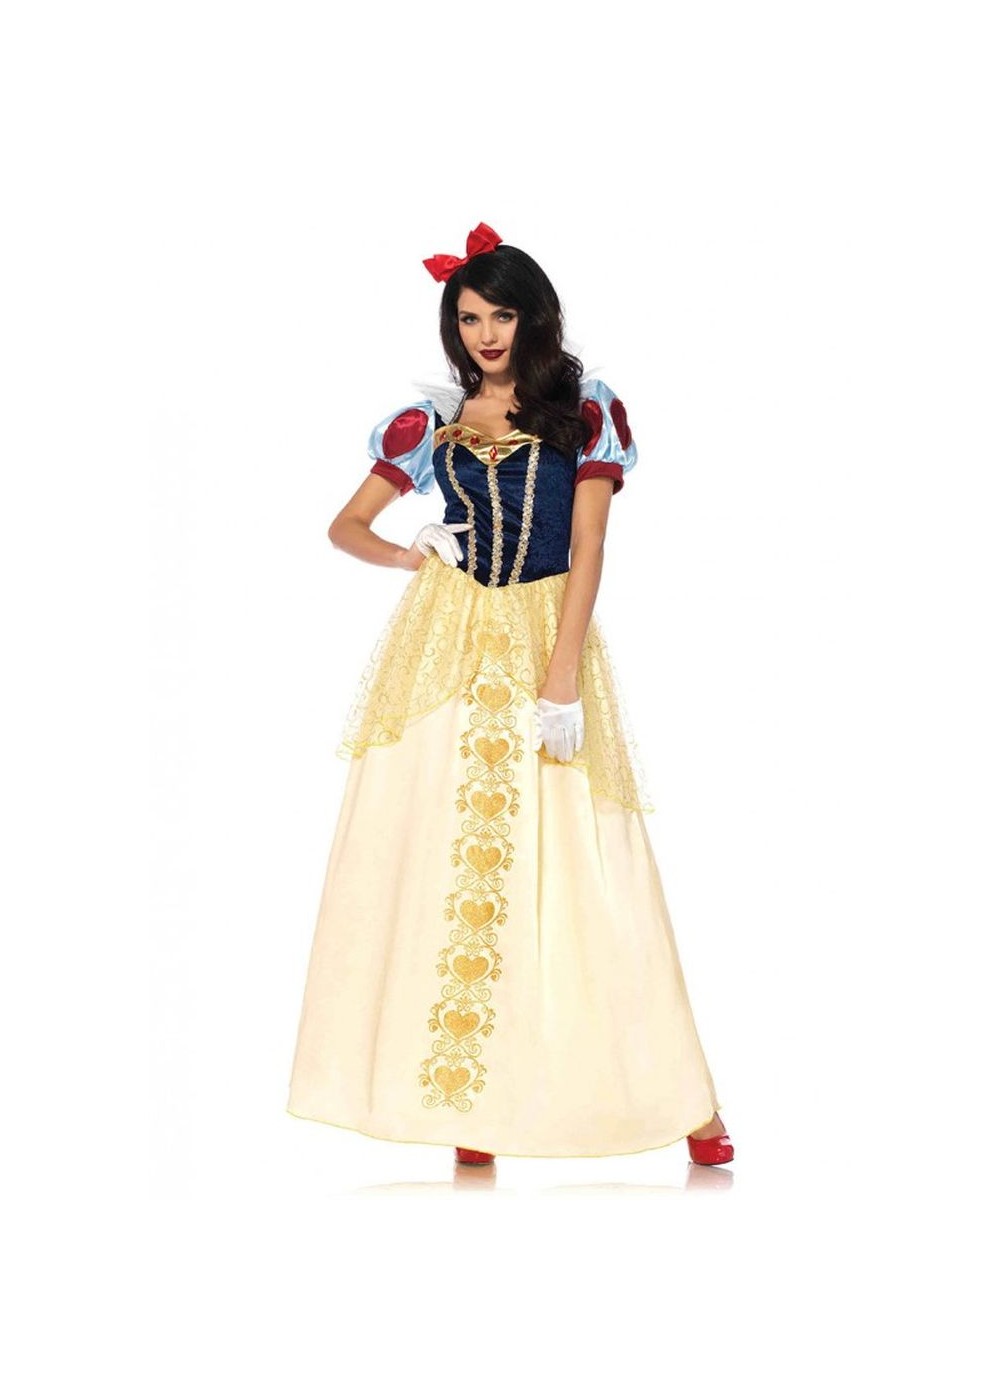 Disney Snow White Woman Costume